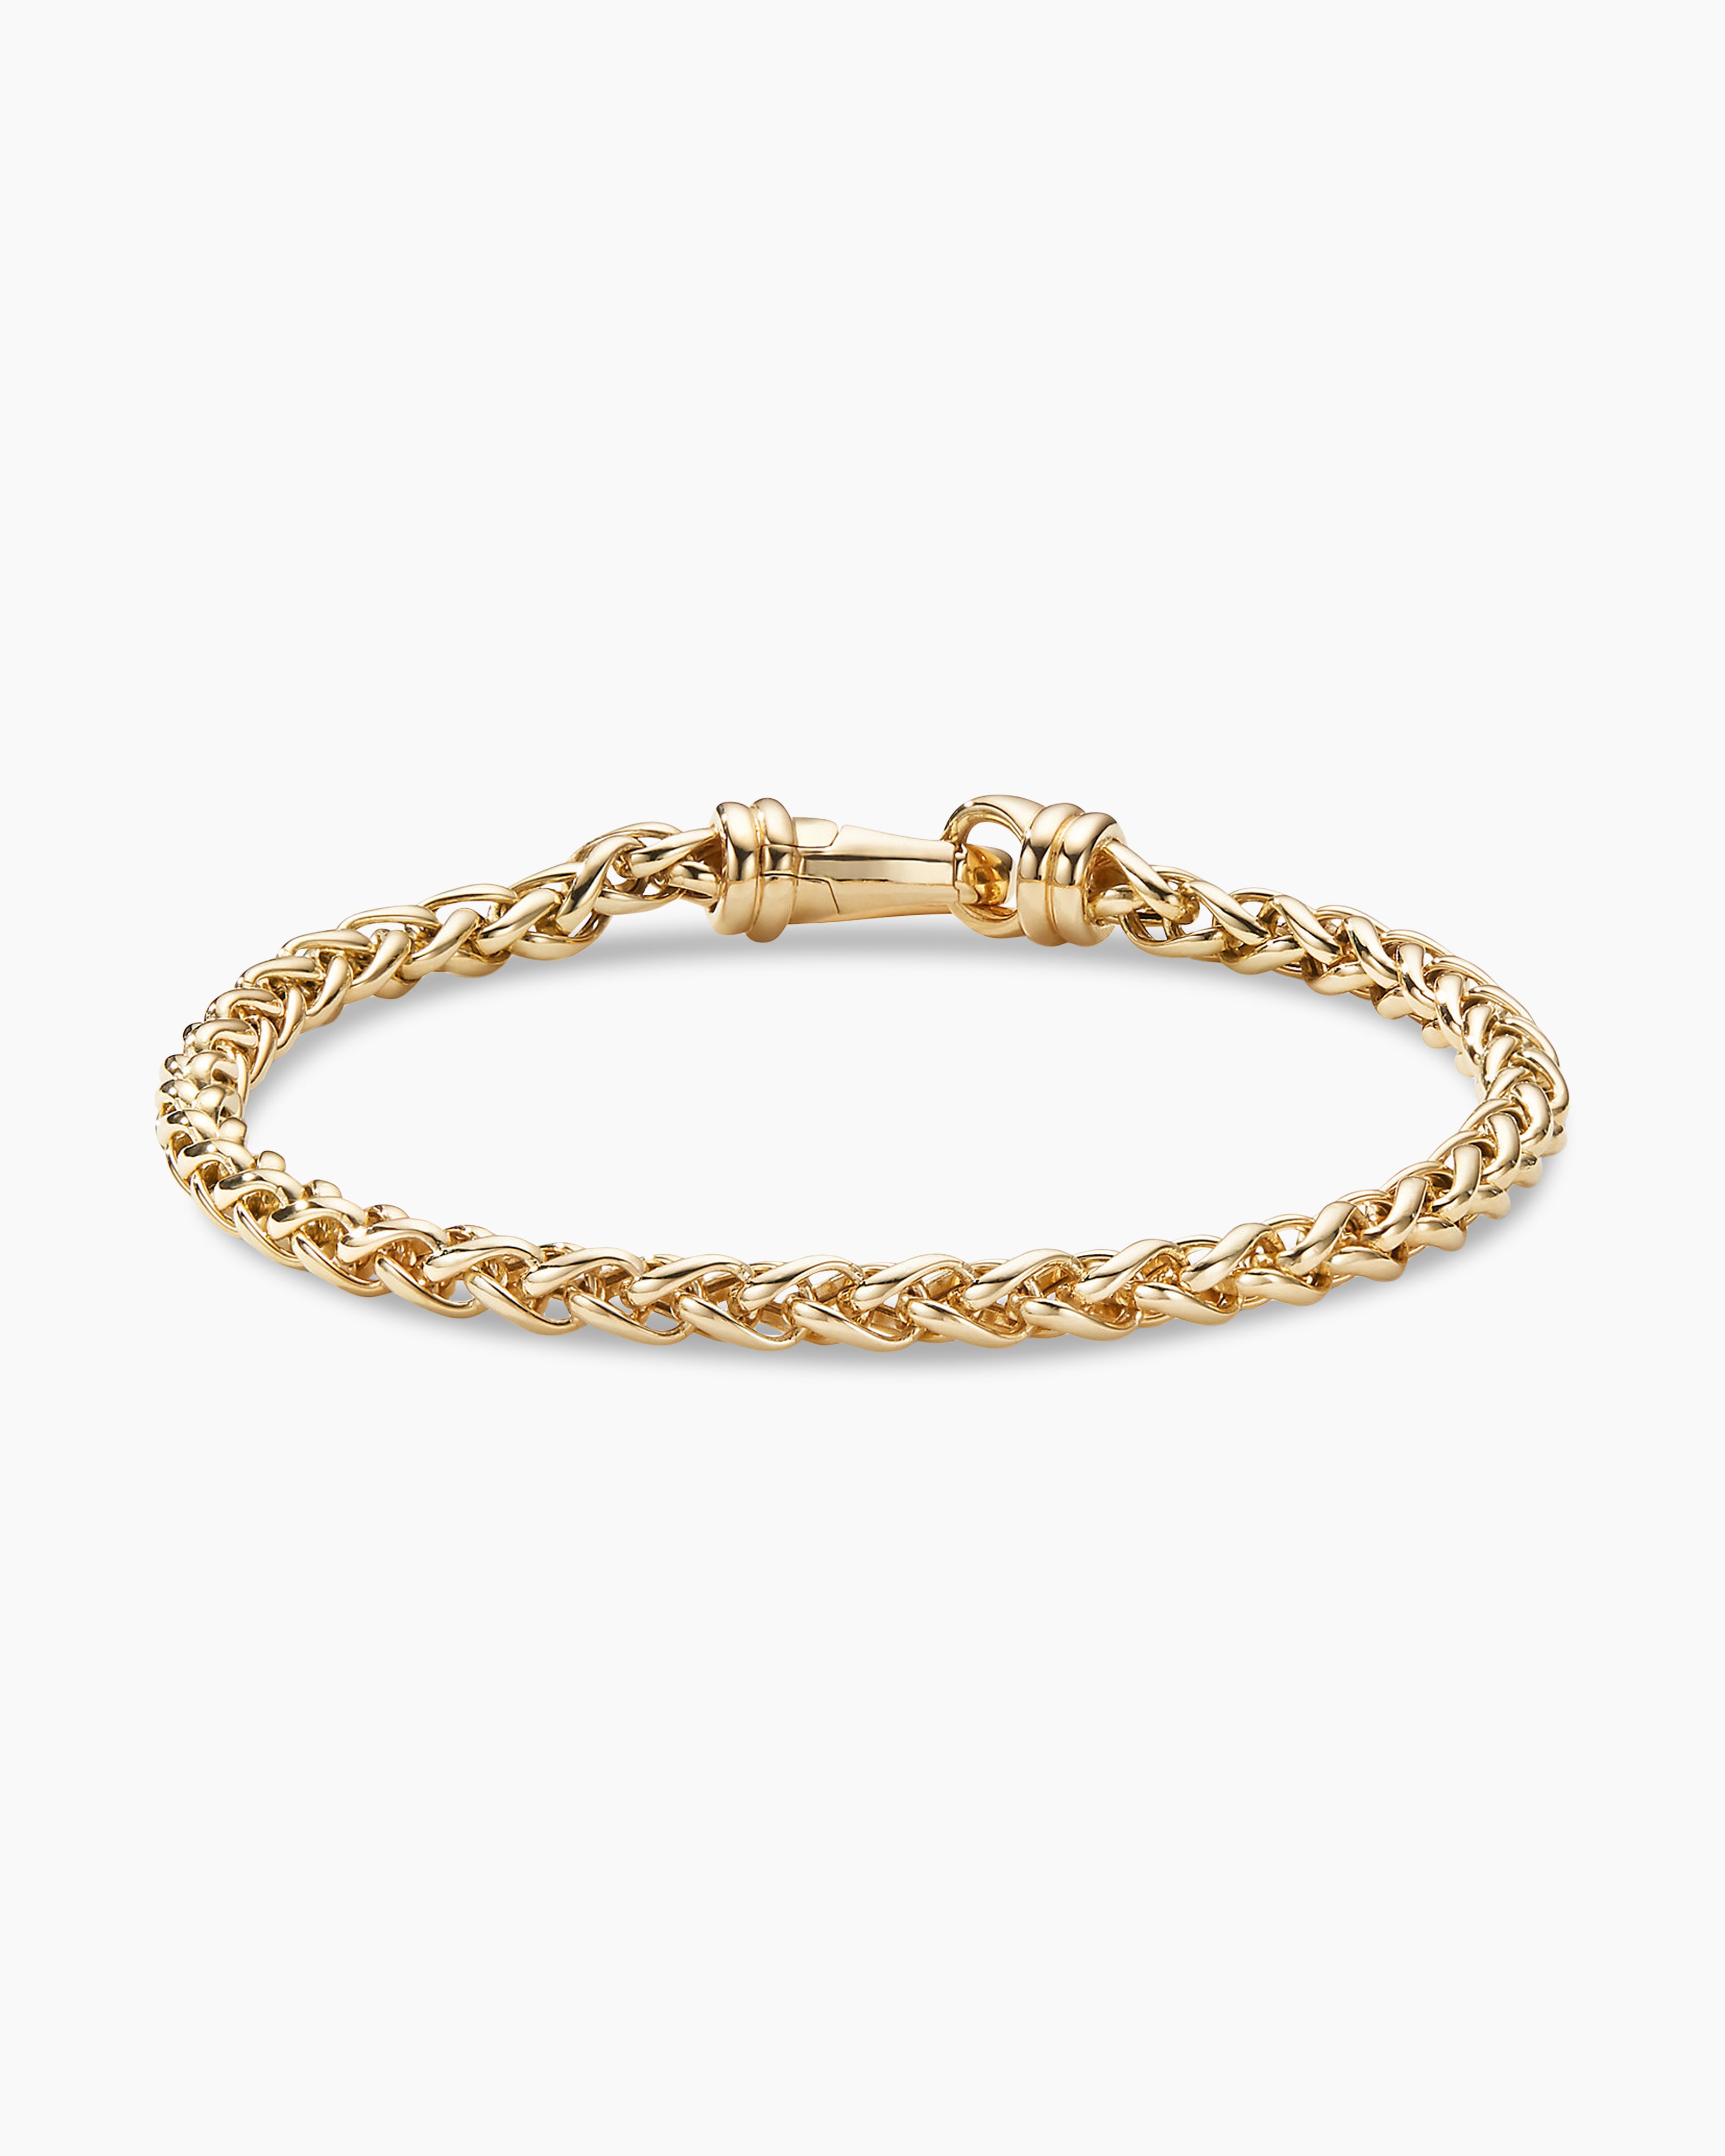 Buy 18K Solid Gold Rope Chain Bracelet Yellow 18K Rope Bracelet